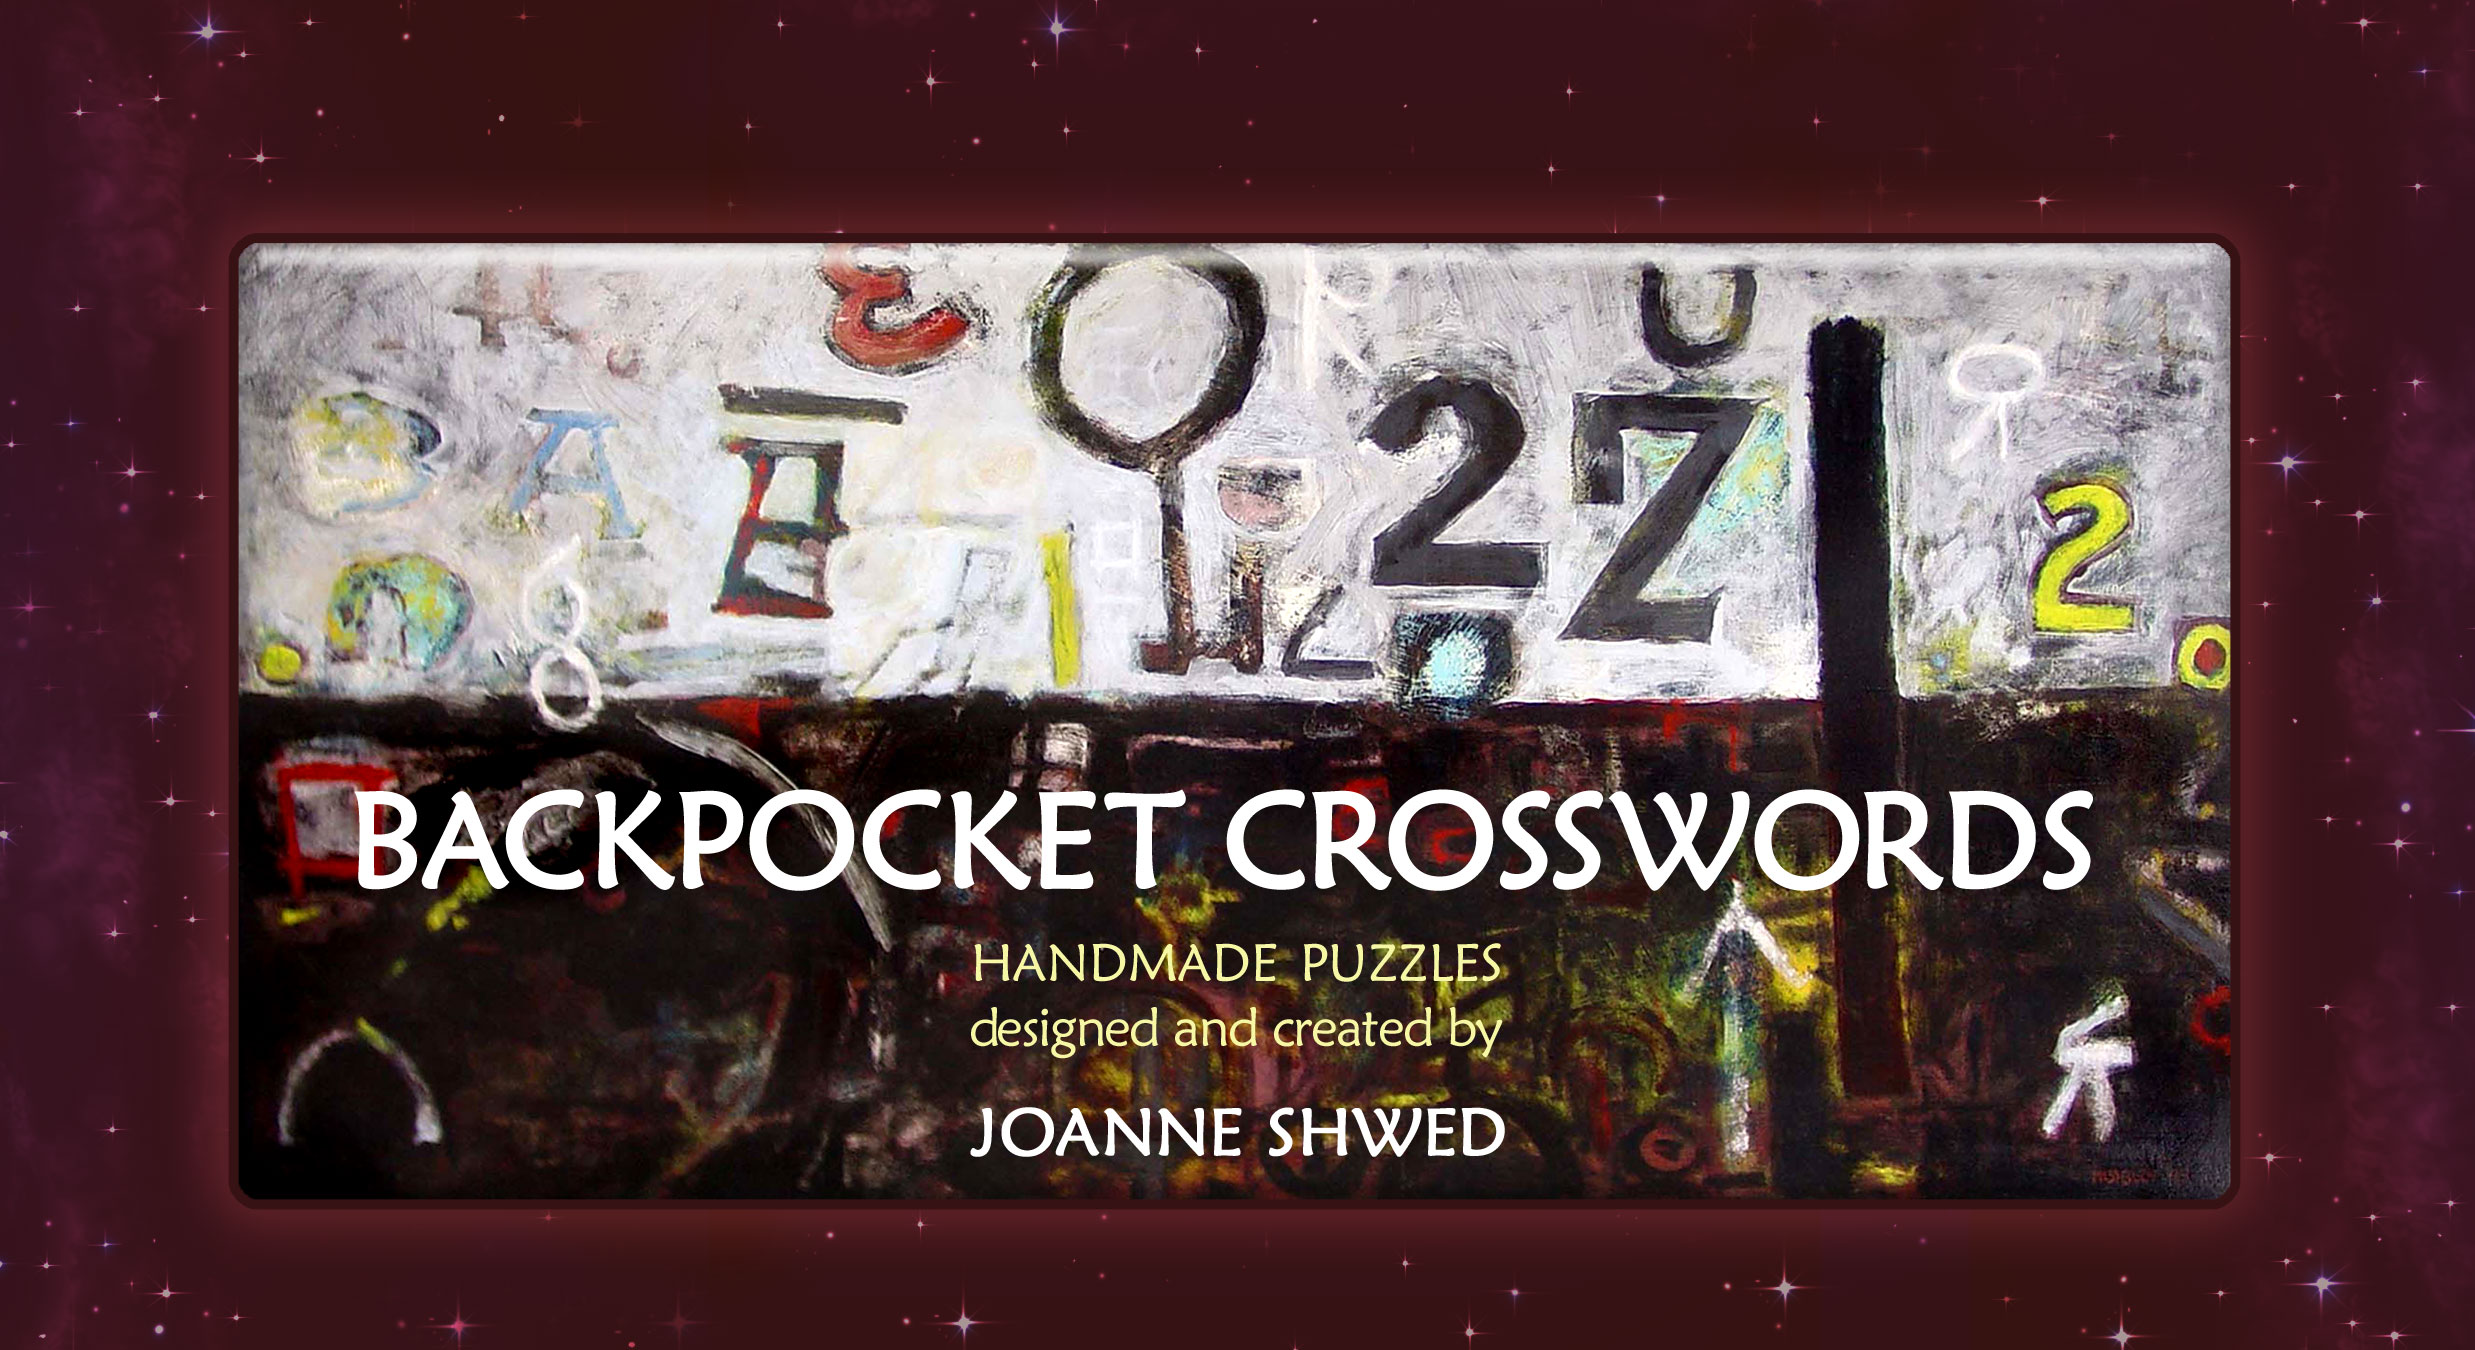 Backpocket Crosswords: Handmade Puzzles